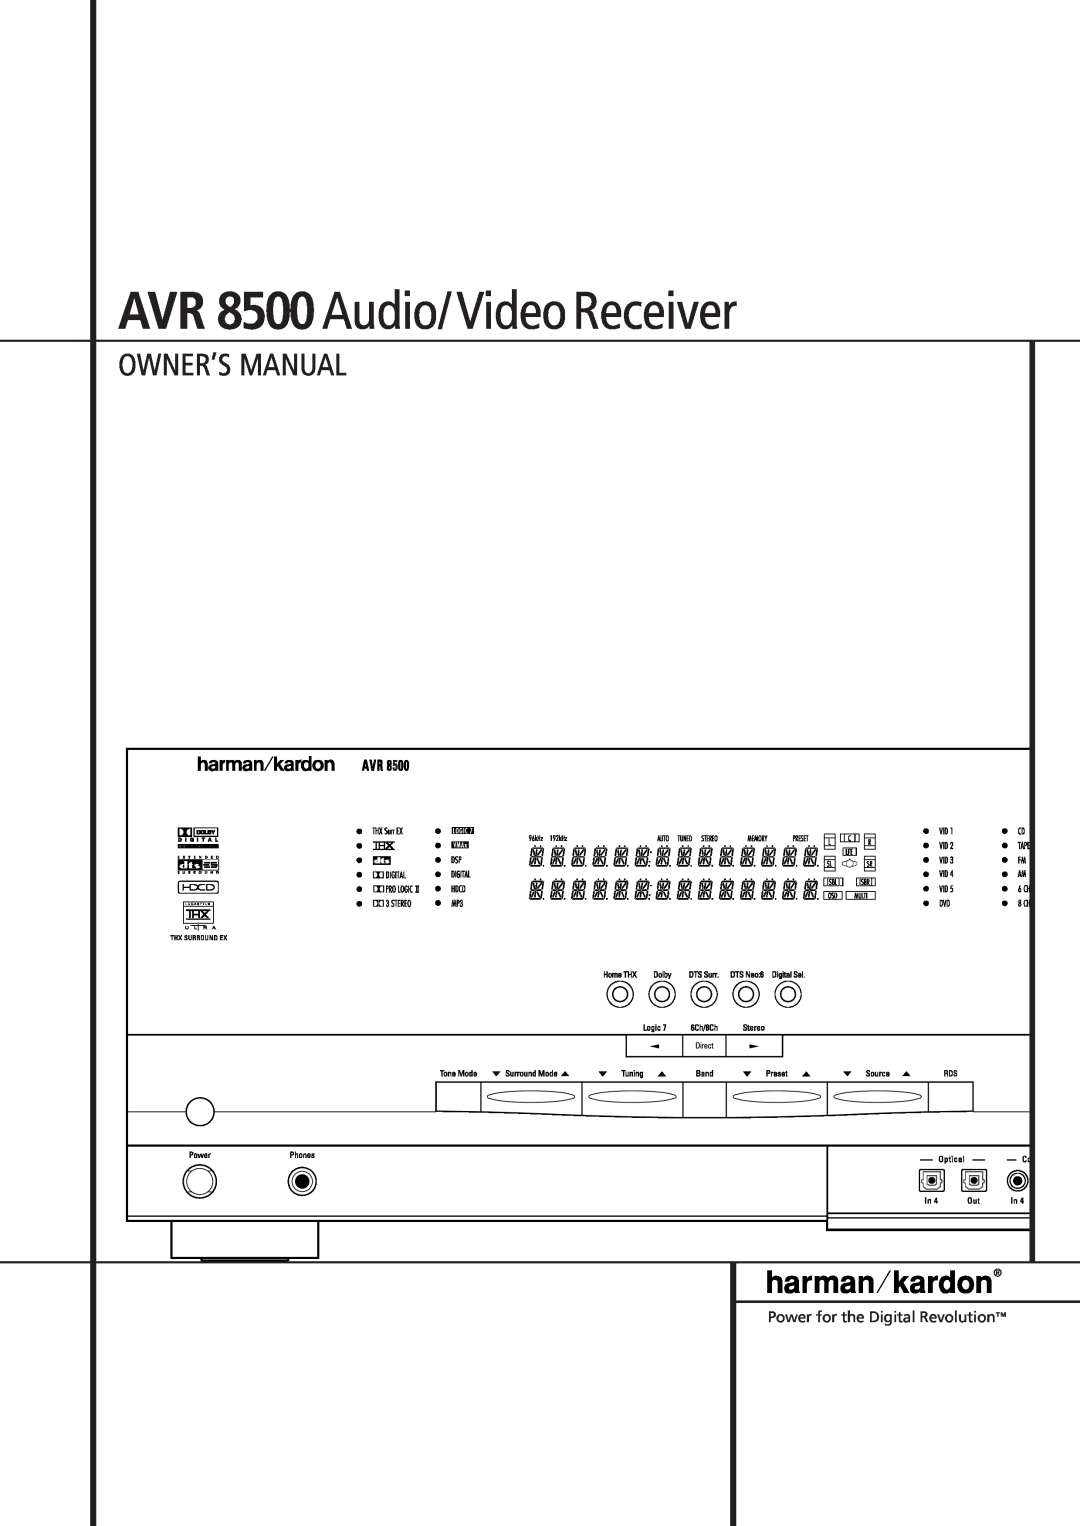 Harman-Kardon owner manual AVR 8500 Audio/ Video Receiver, Owner’S Manual 